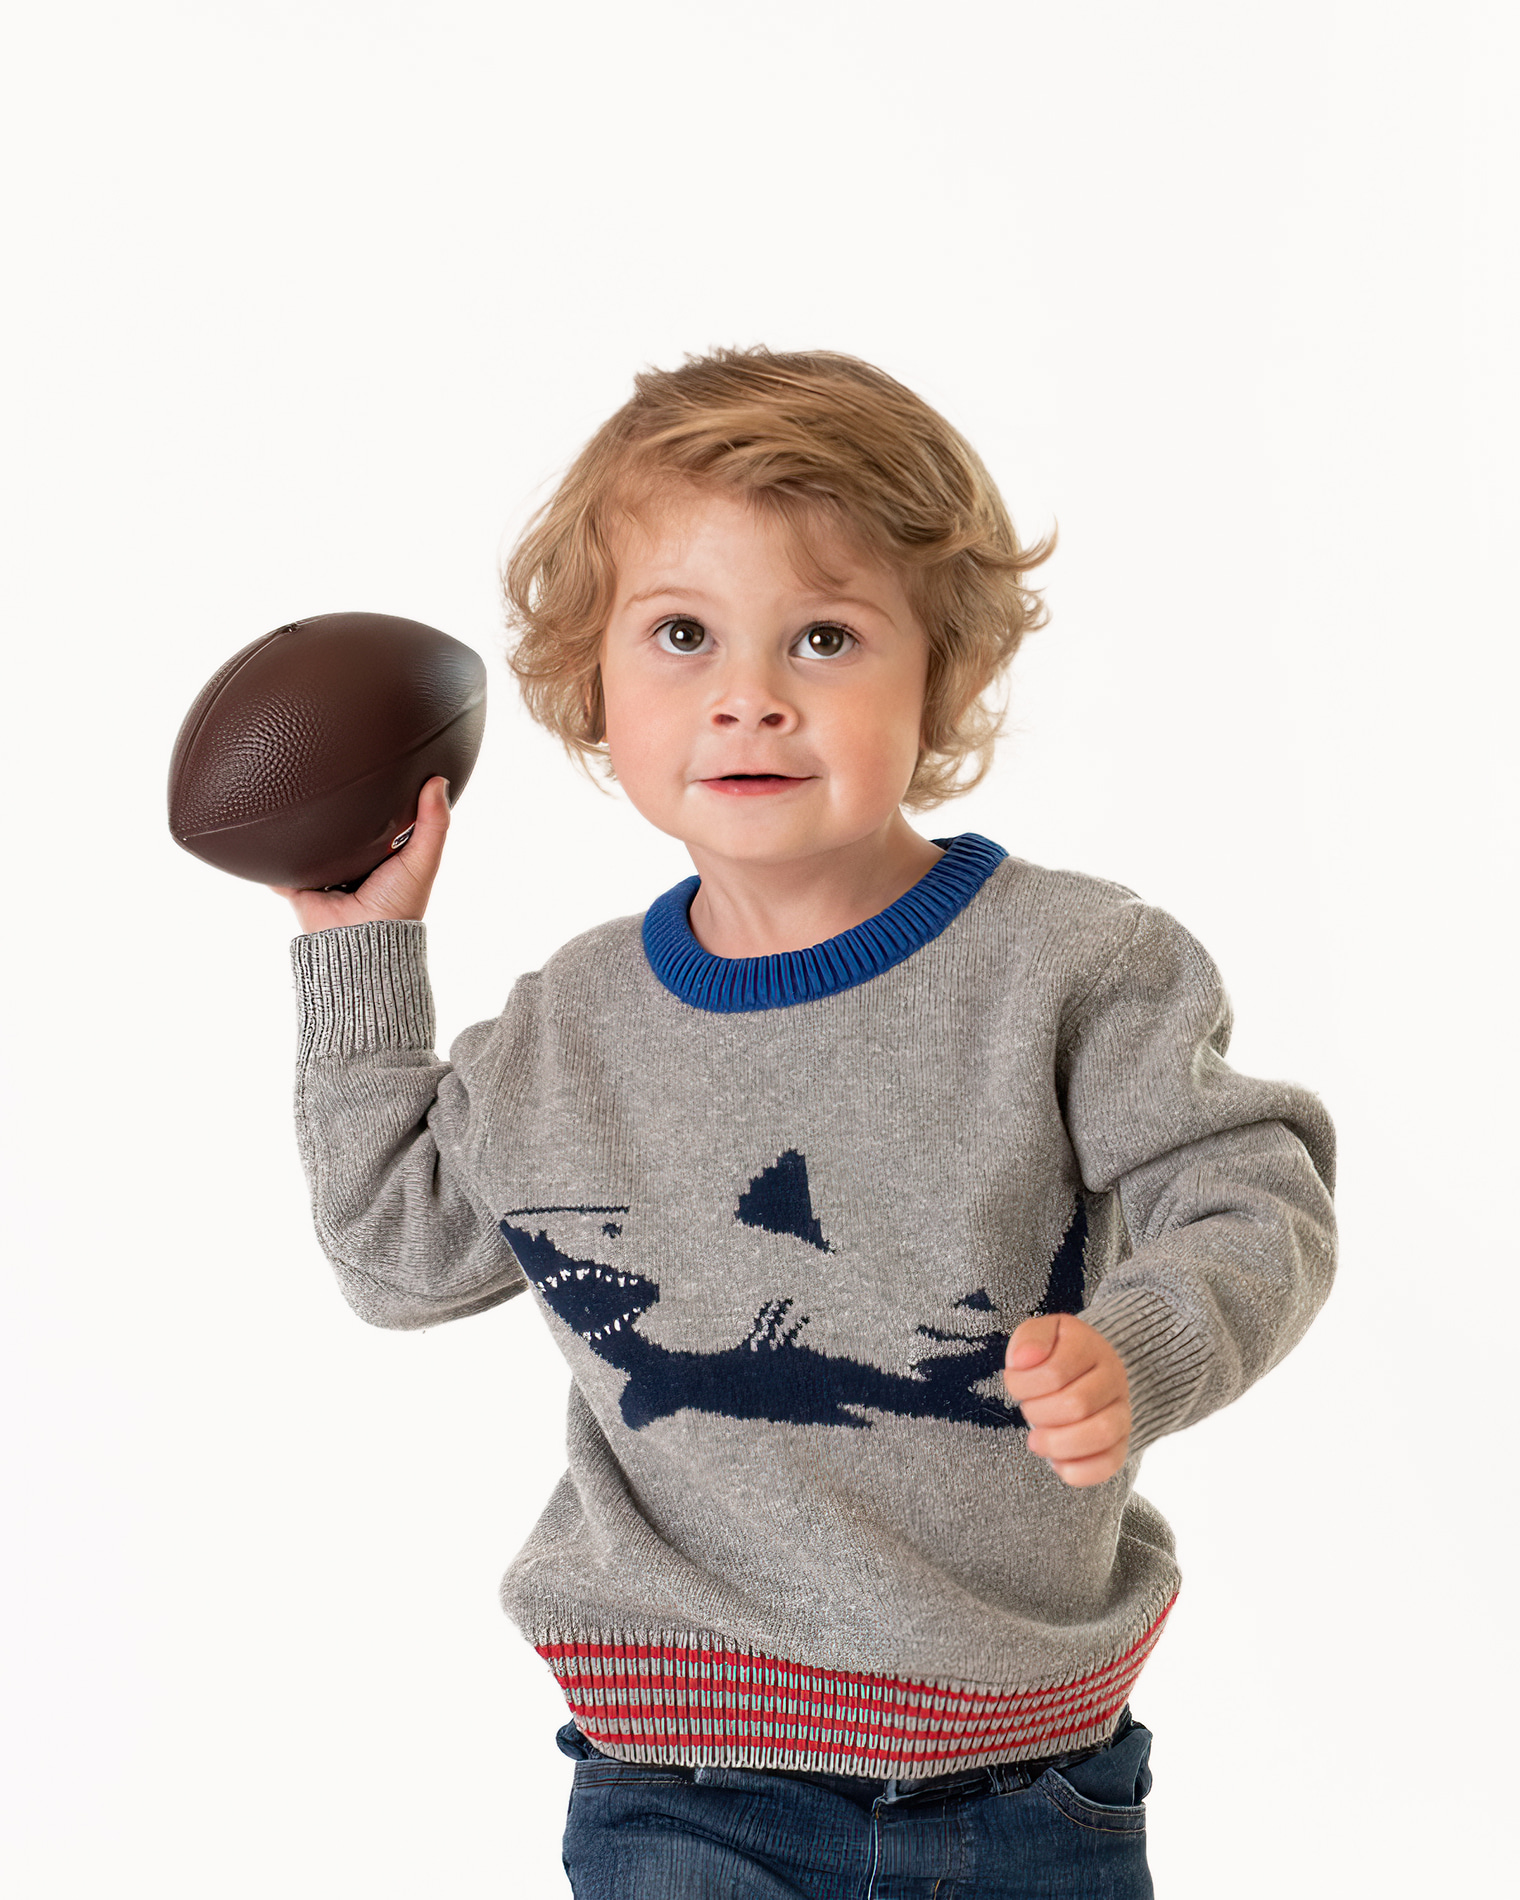 Little boy in grey sweater holding a football Houston Pediatricians